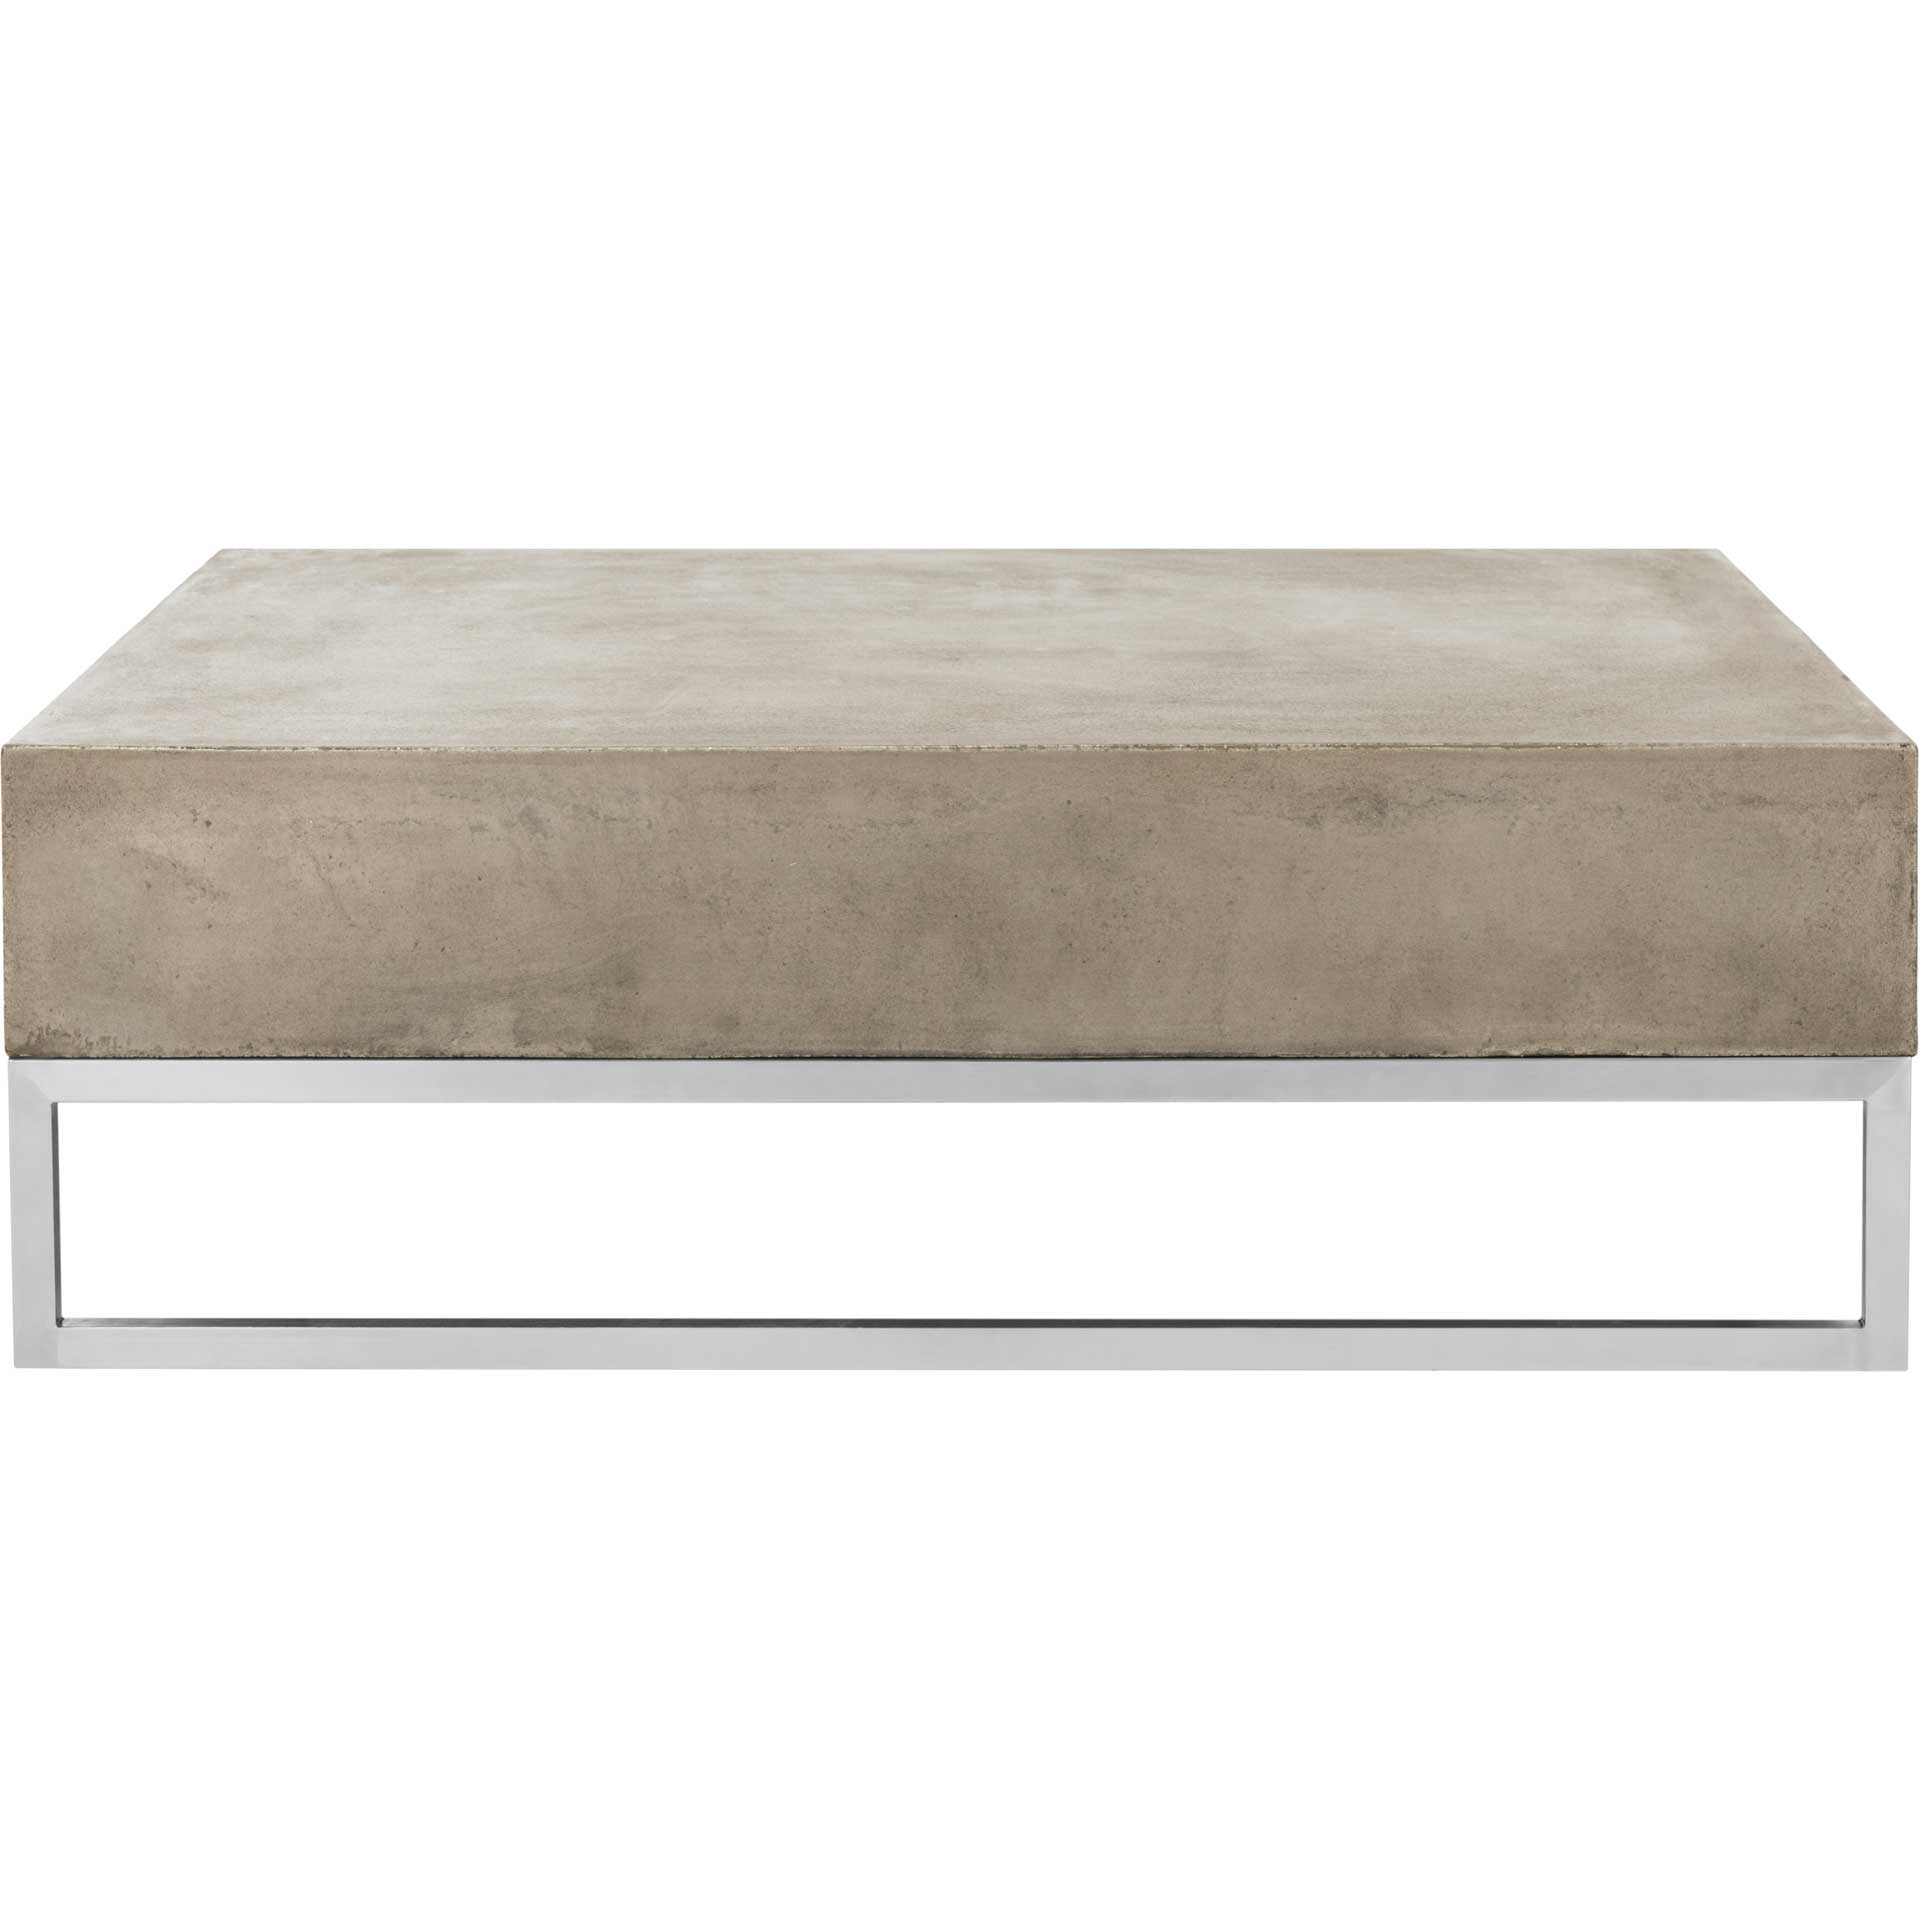 Eabroni Modern Concrete Coffee Table Dark Gray